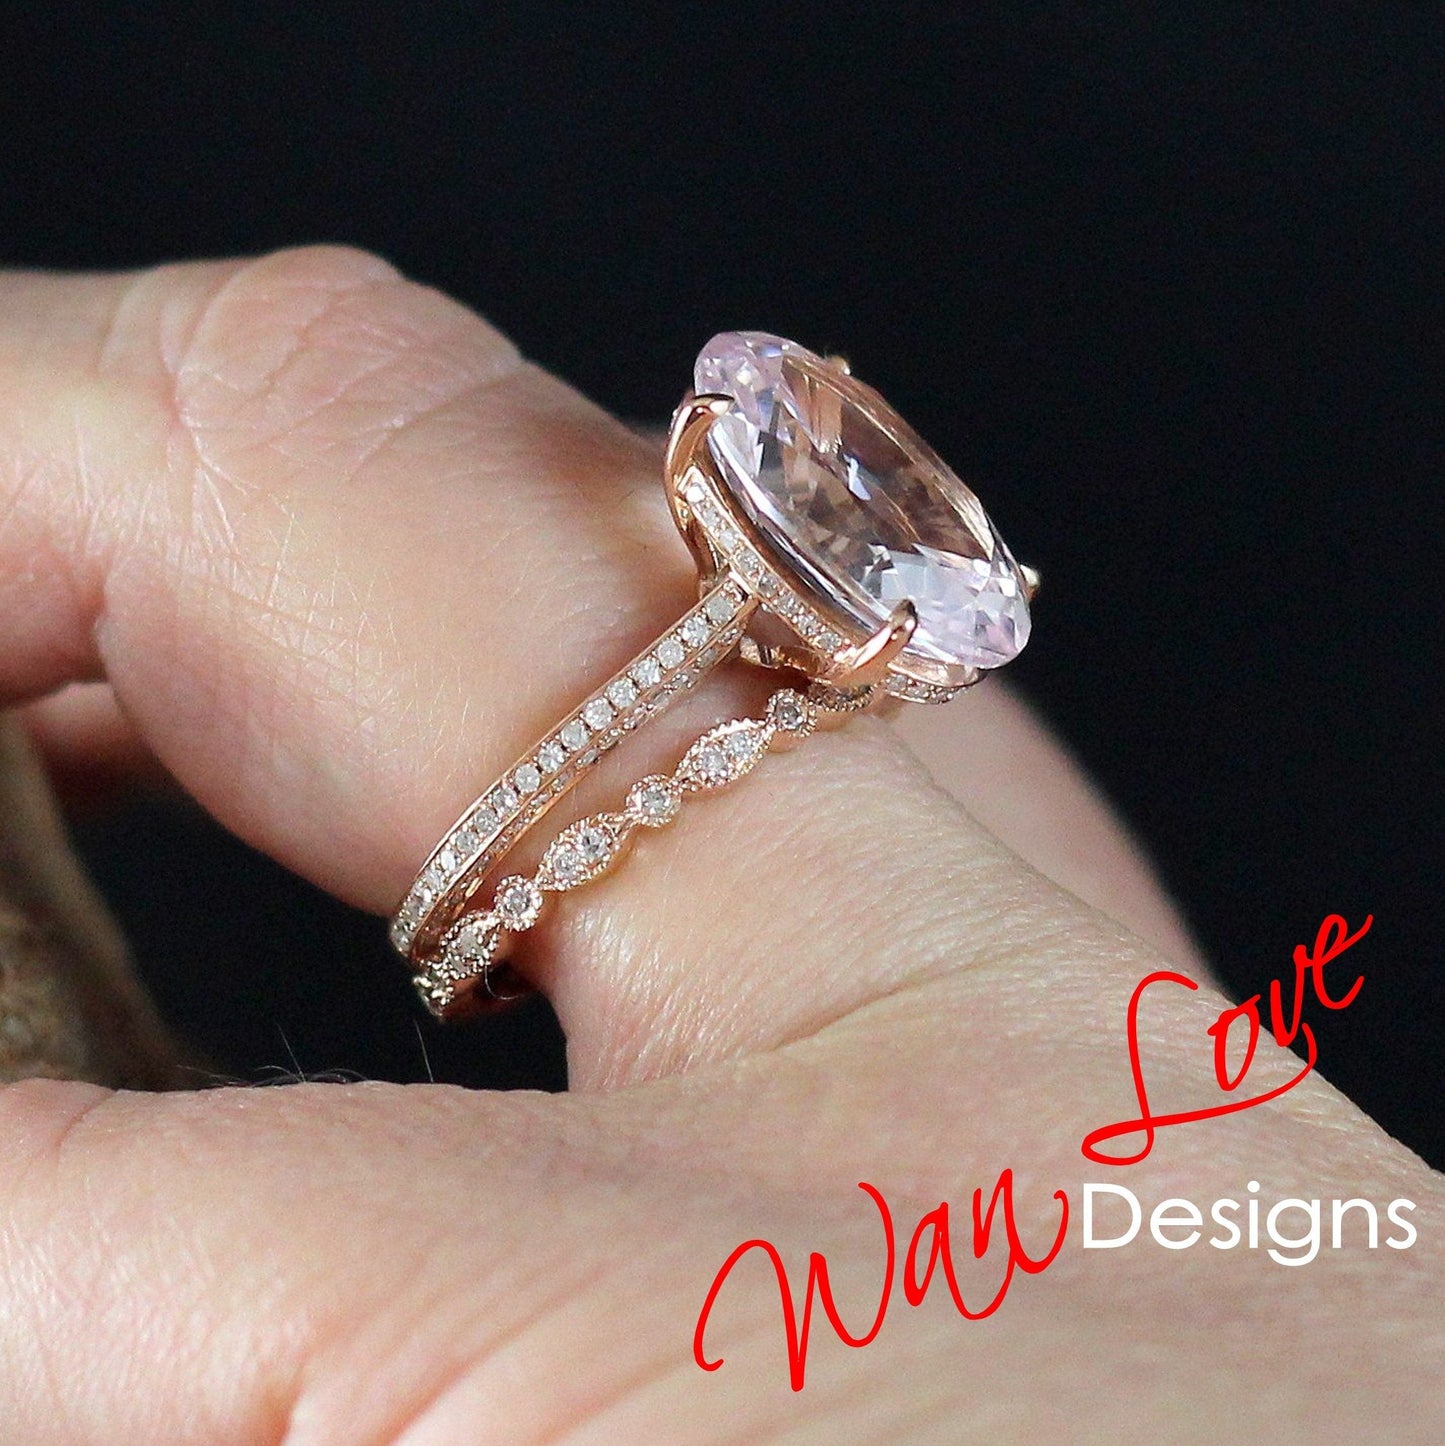 Light Pink Sapphire engagement ring set rose gold Vintage Diamond wedding ring 9ct antique Bridal side halo bridal set Promise Anniversary Wan Love Designs